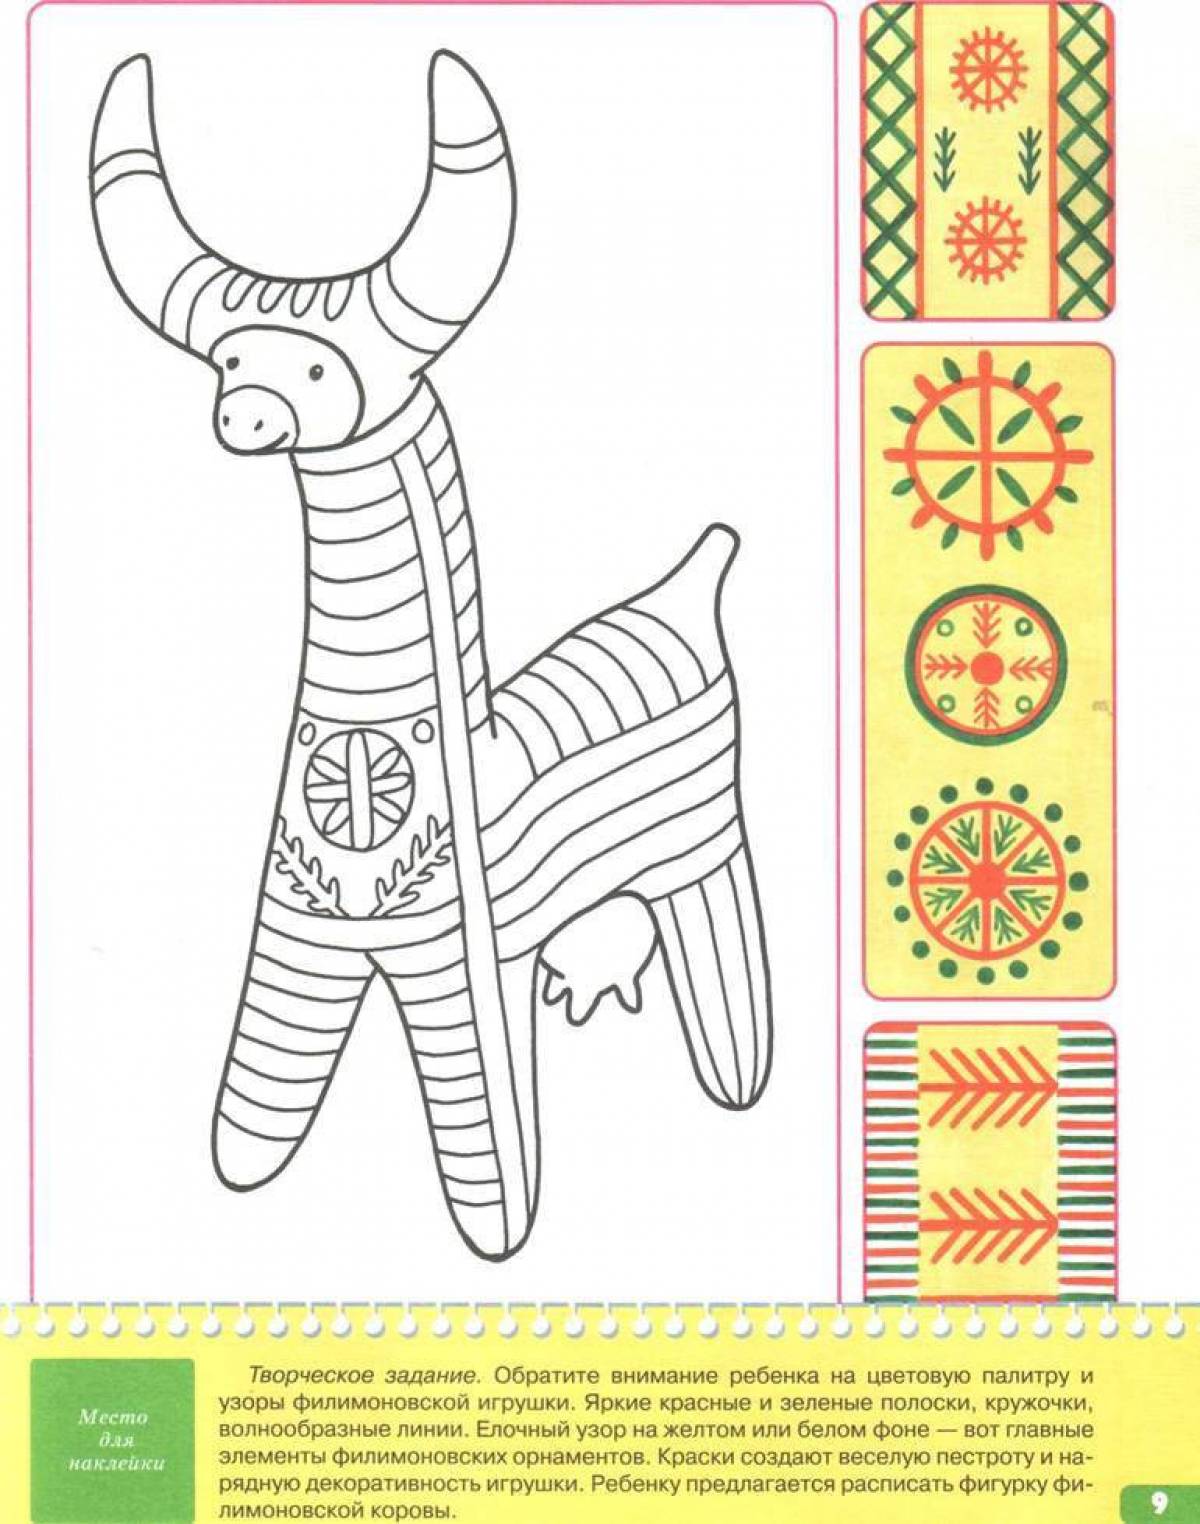 Creative Filimonov toy coloring book